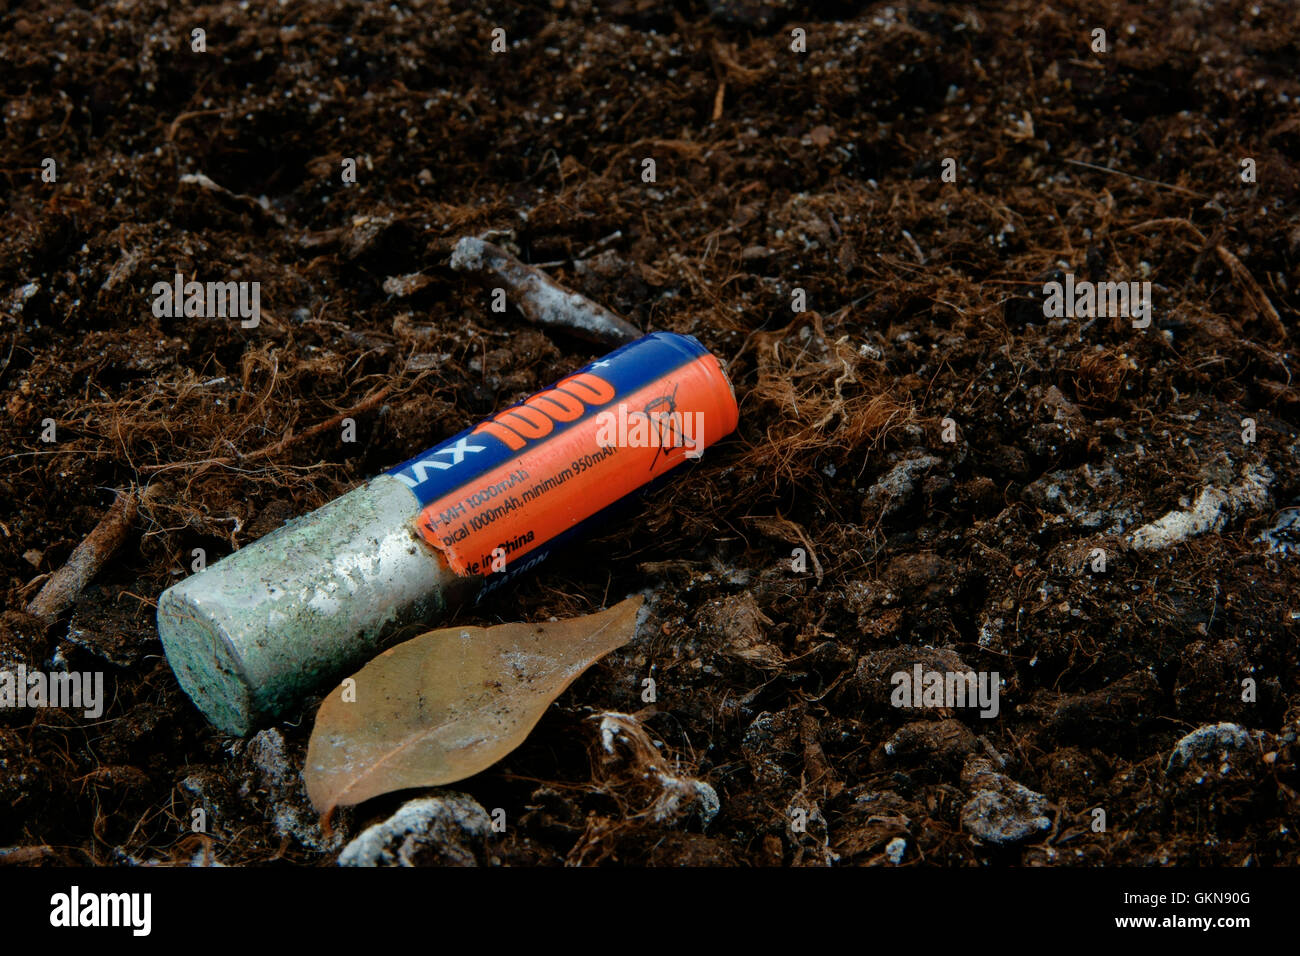 Battery. Environmental pollution Stock Photo - Alamy